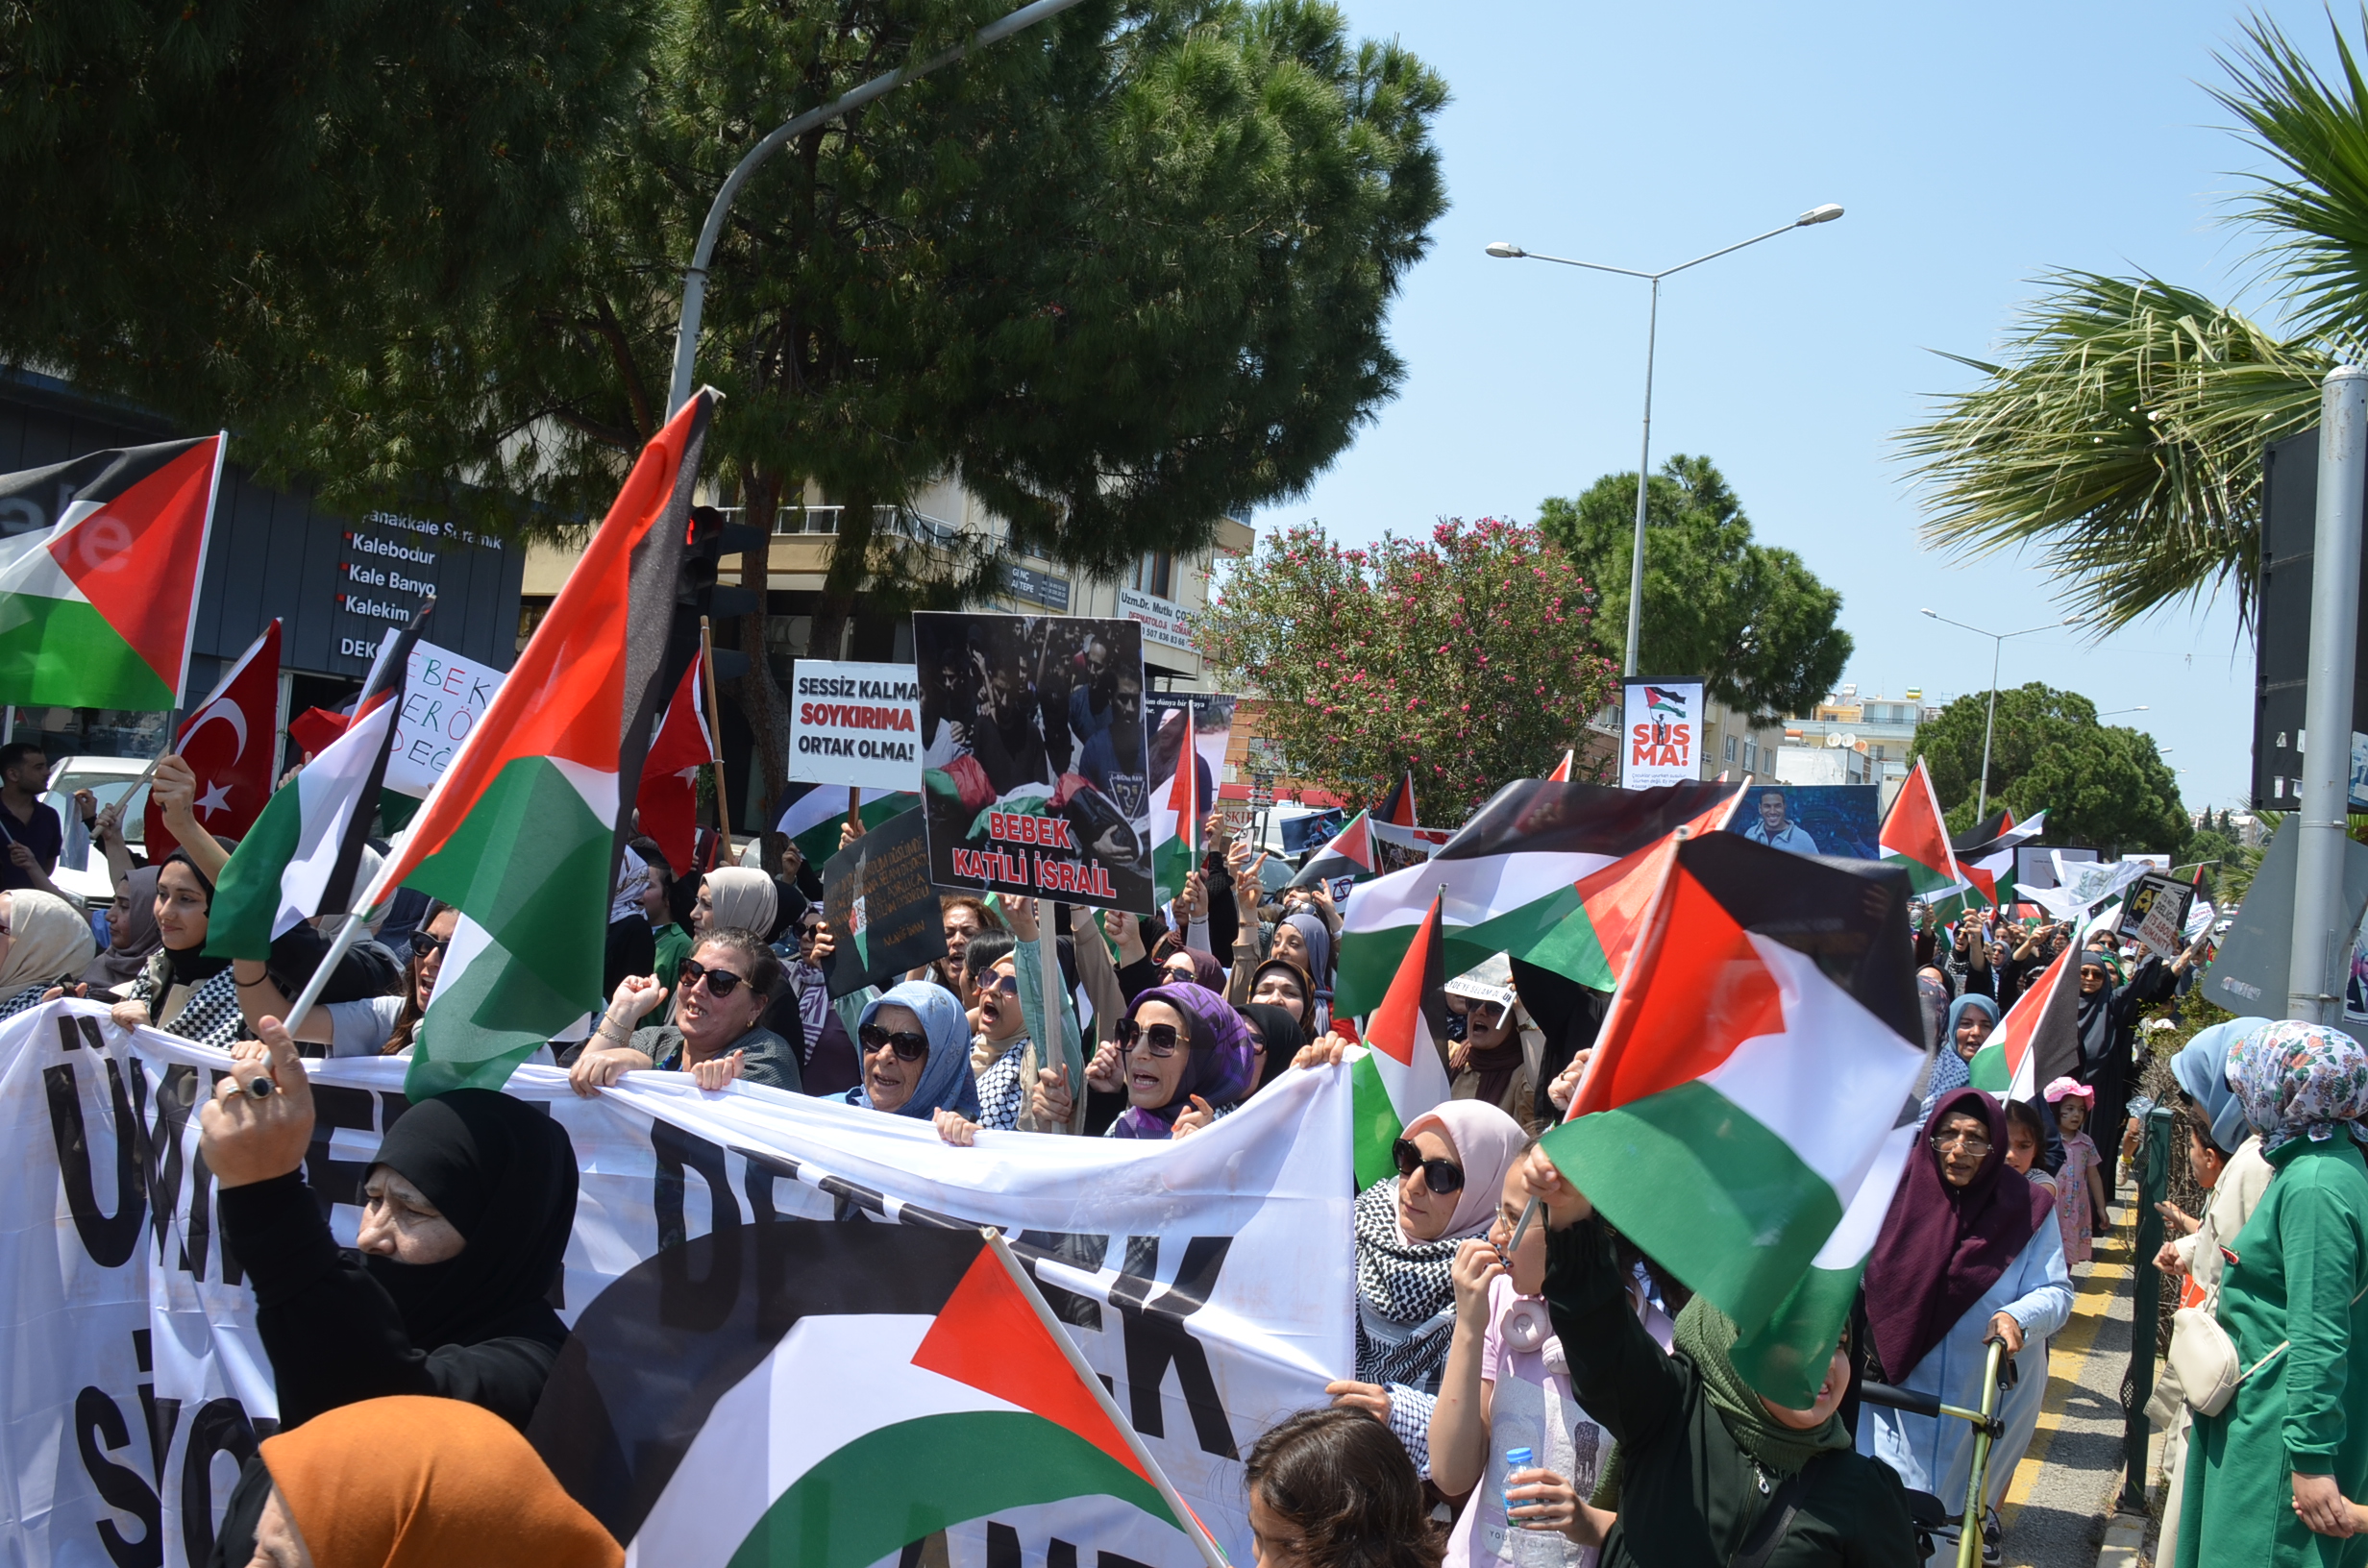 Didimde Filistine Ozgurluk Sloganlariyla Israil Protesto Edildi 469417 C3Bb73A4B2A32B640Da59A5647B6F164